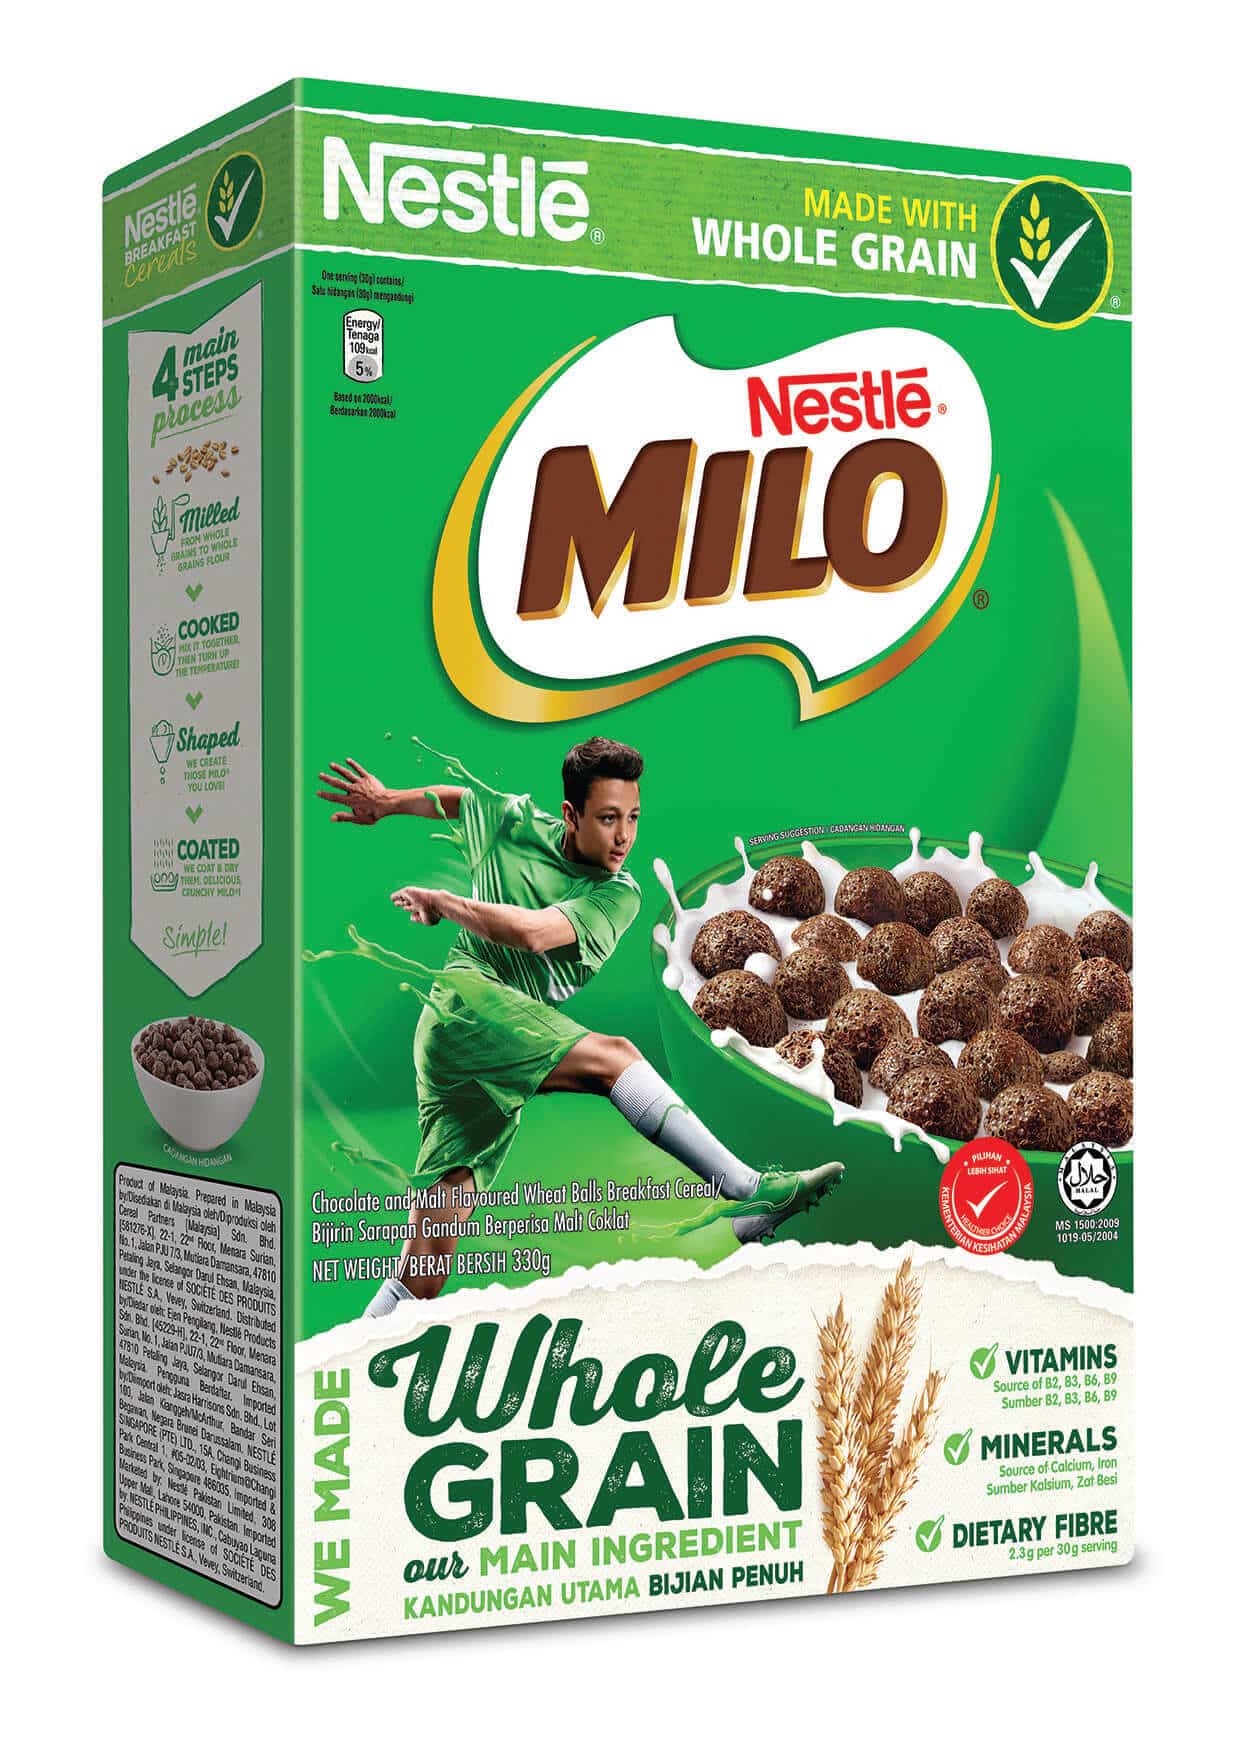 Nestle-Milo